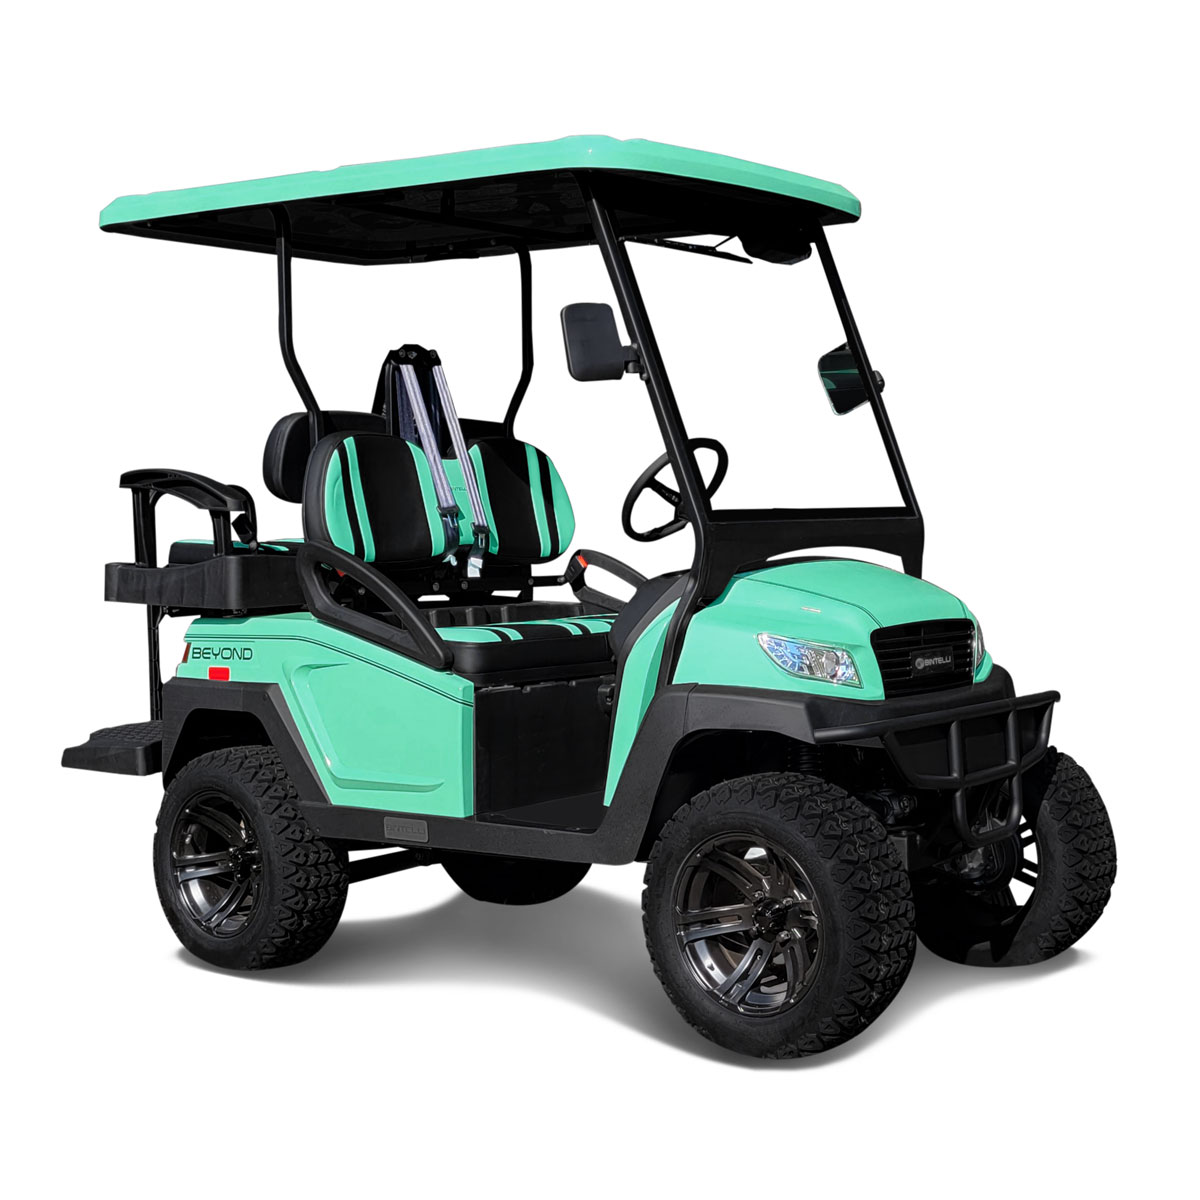 Bintelli Beyond Lifted 4PR street legal golf cart in Mint